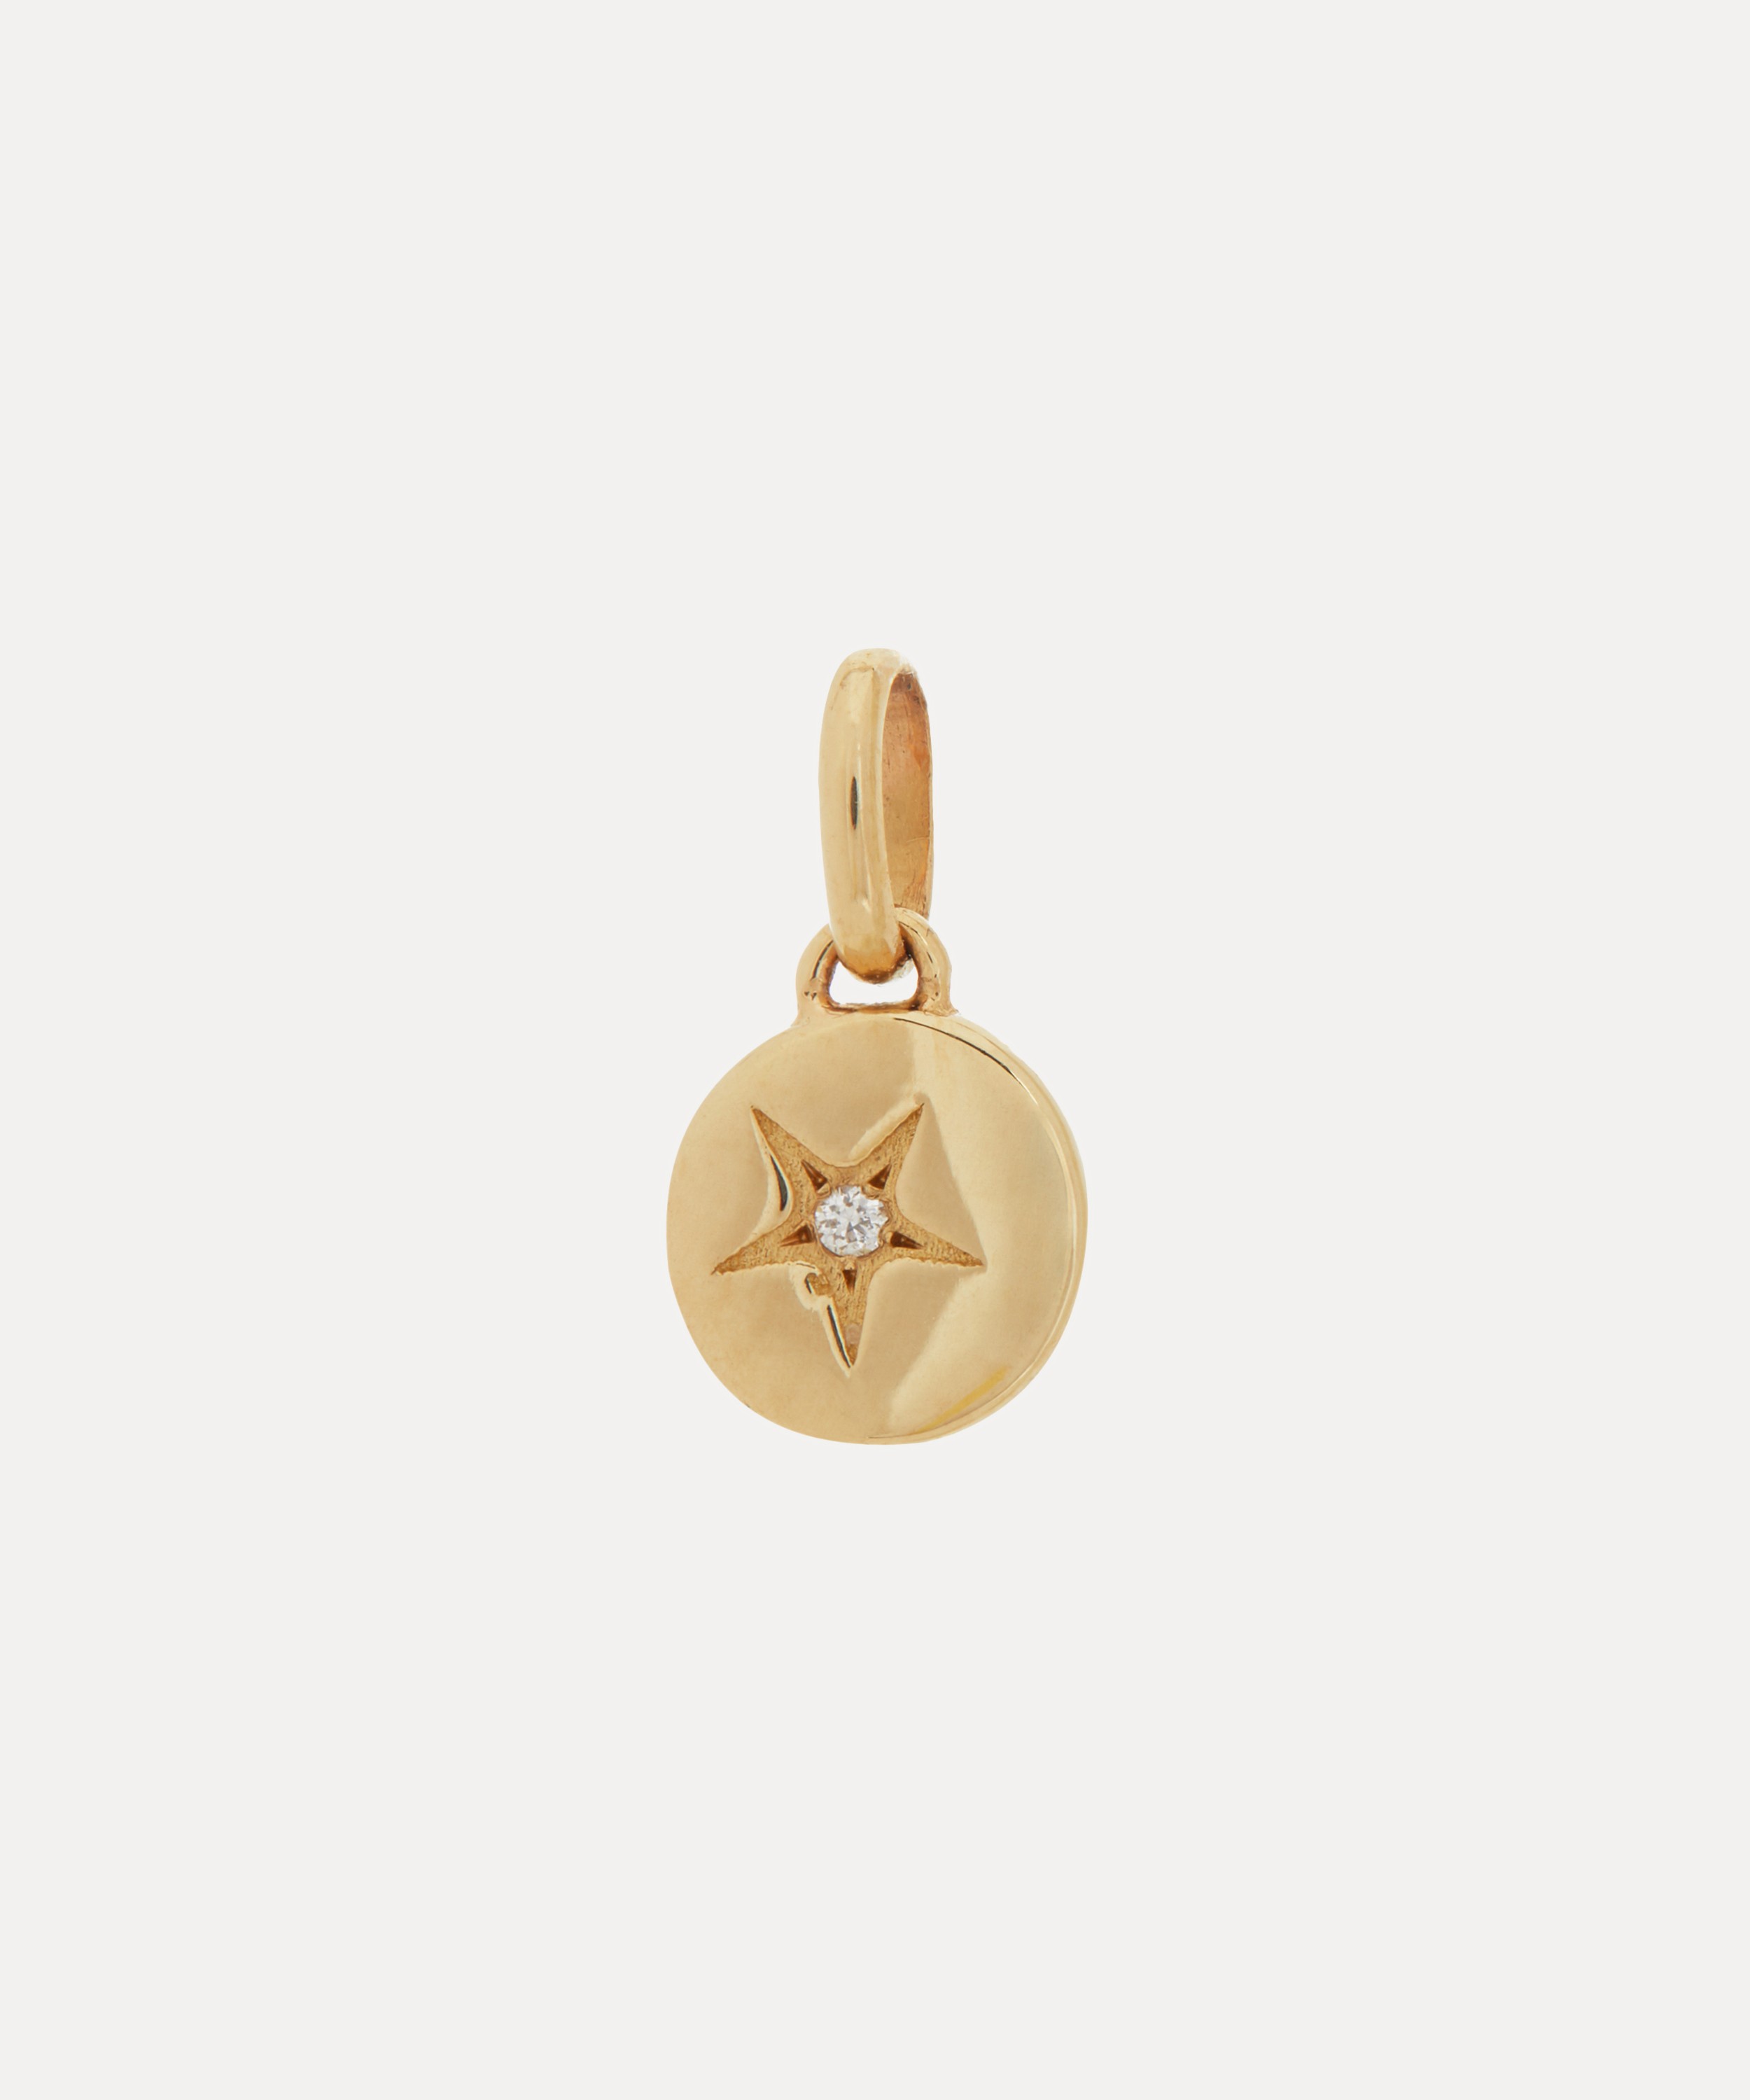 Shop online keepsake jewellery Amante Solid 9ct Gold Star Charm Pendant